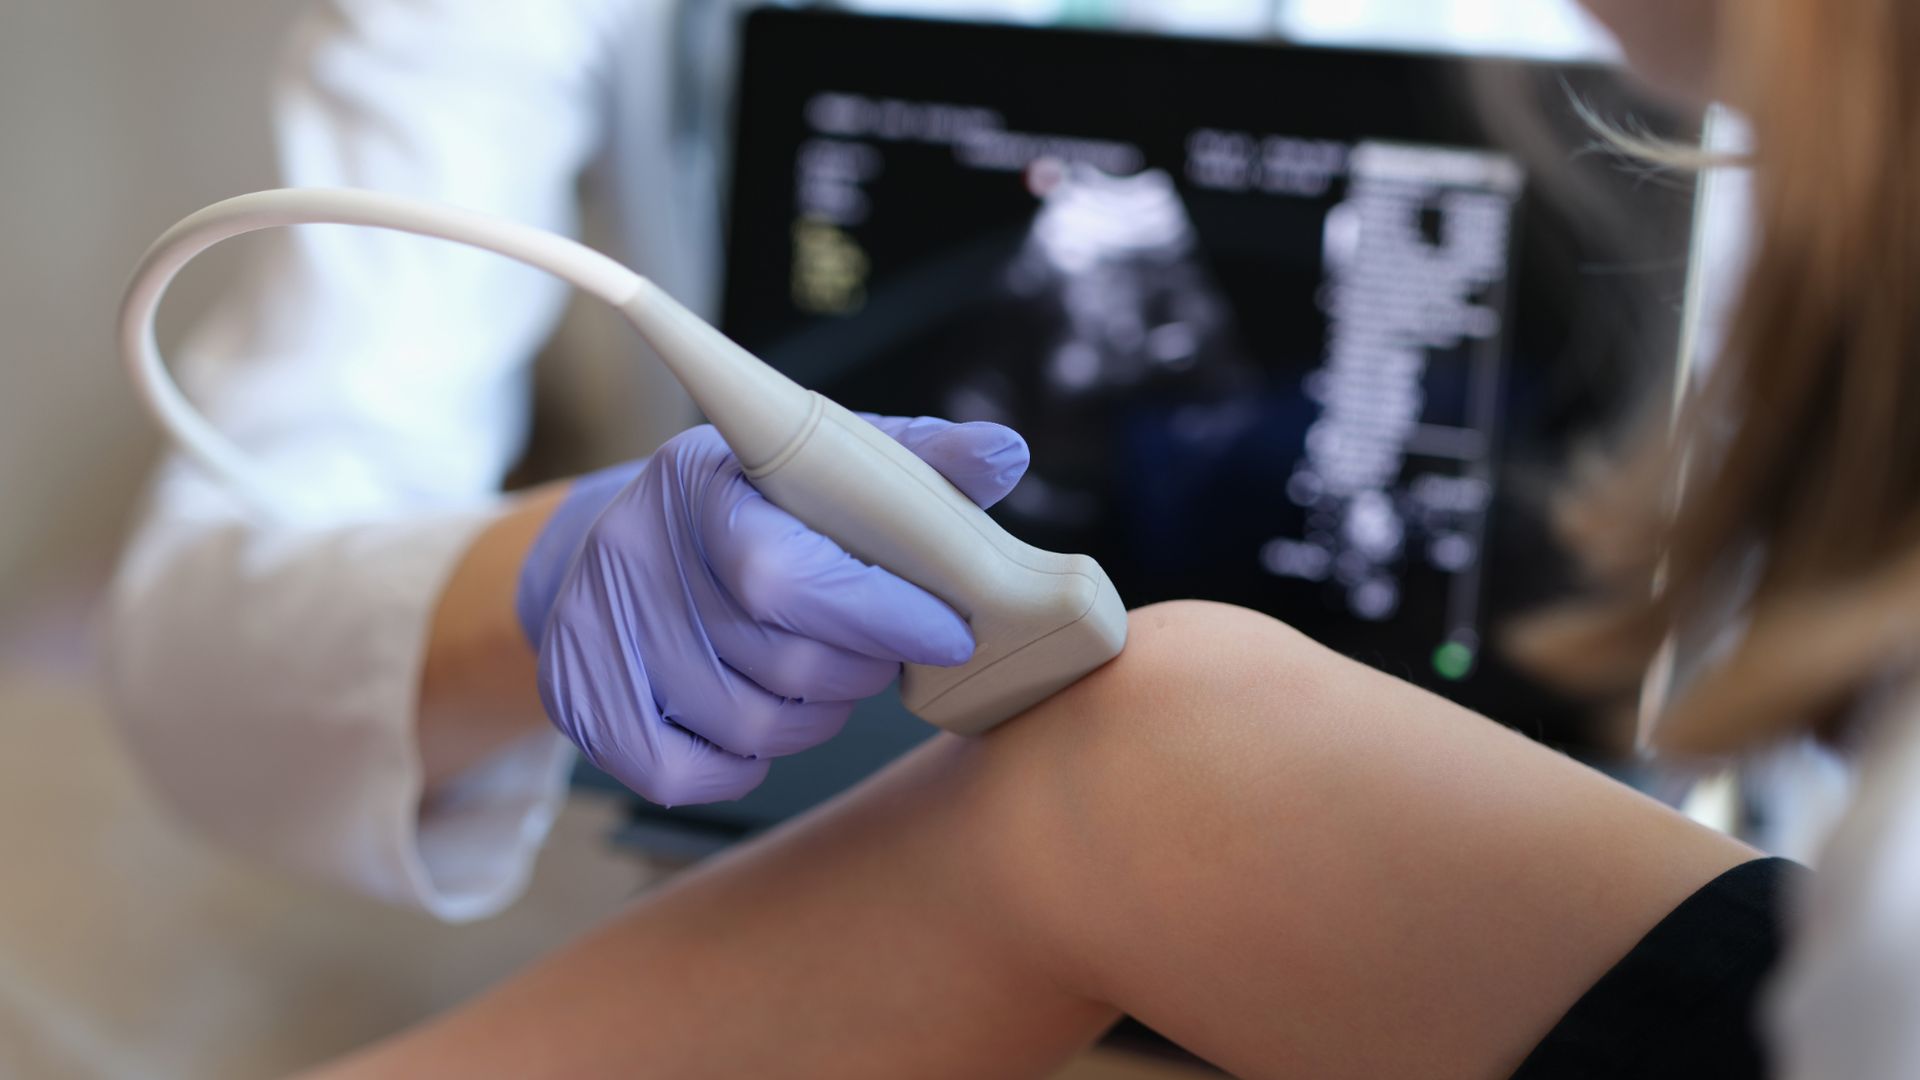 cloesup of doctor using ultrasound to examine patient's knee